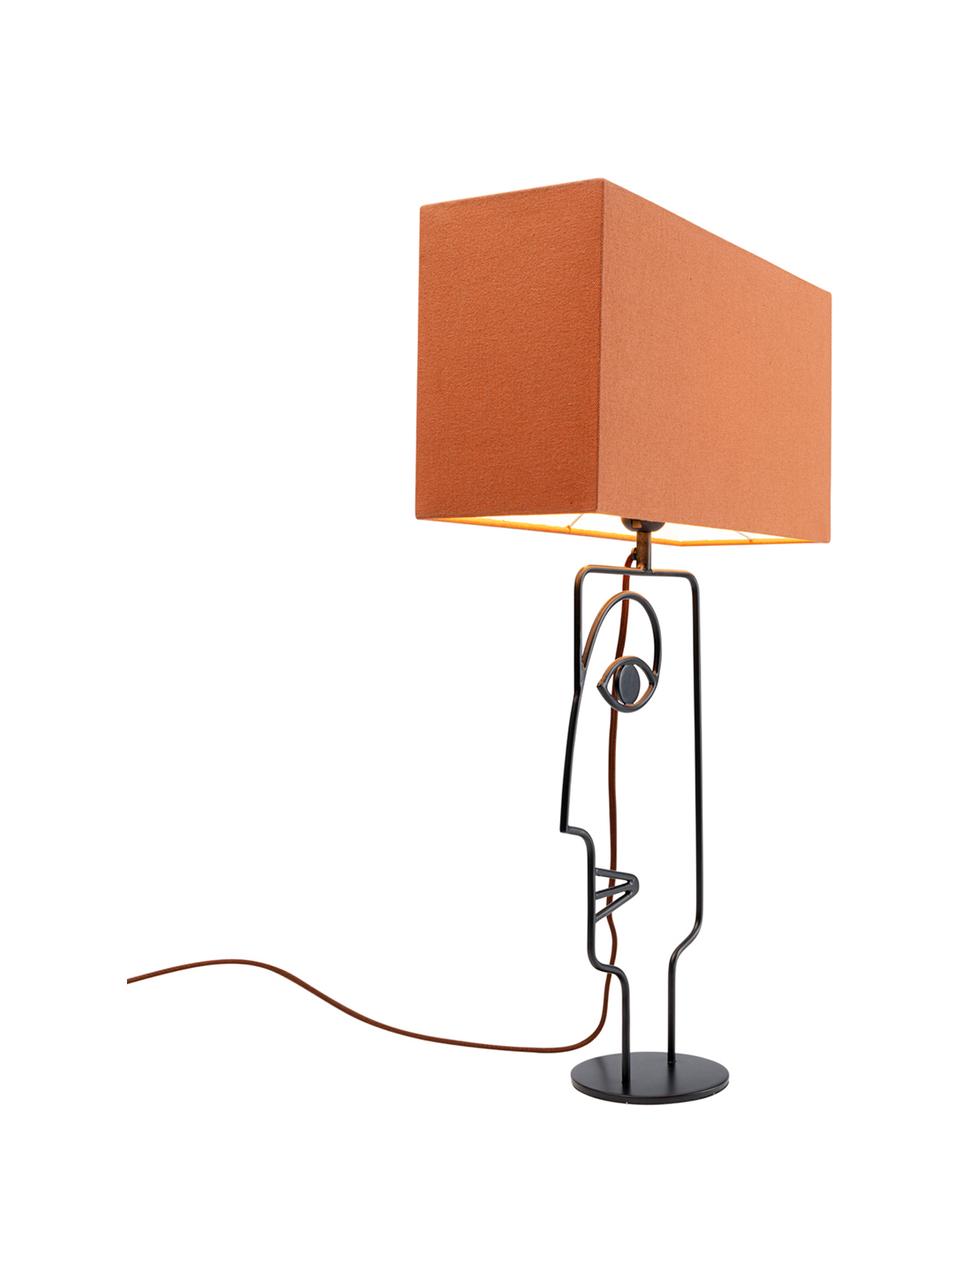 Grand lampe à poser design Face Orange, Orange, noir